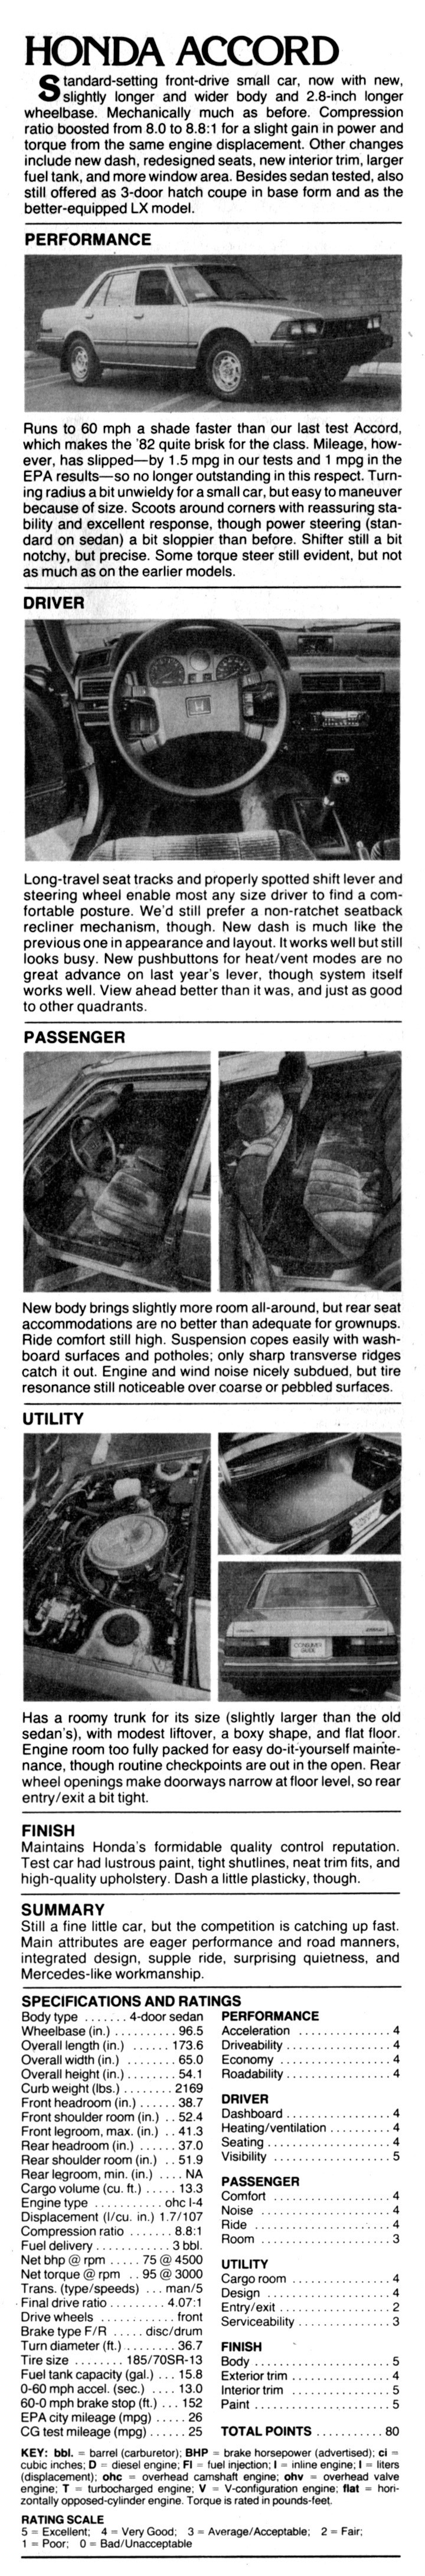 1982 Honda Accord Review